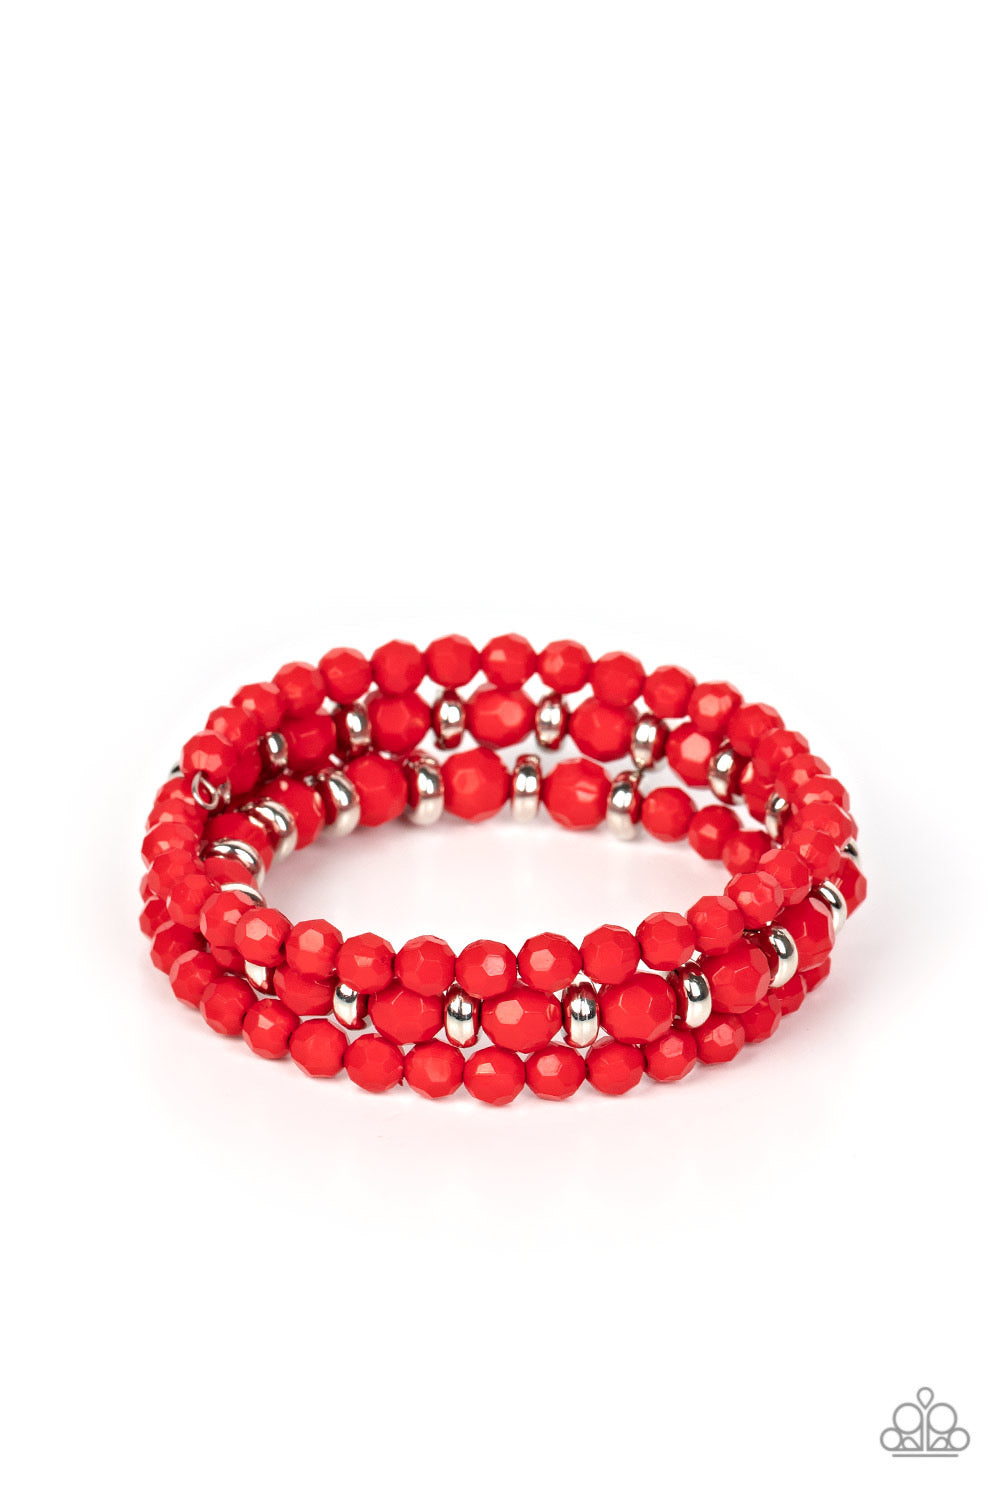 Paparazzi Its a Vibe - Red Bracelet -Paparazzi Jewelry Images 